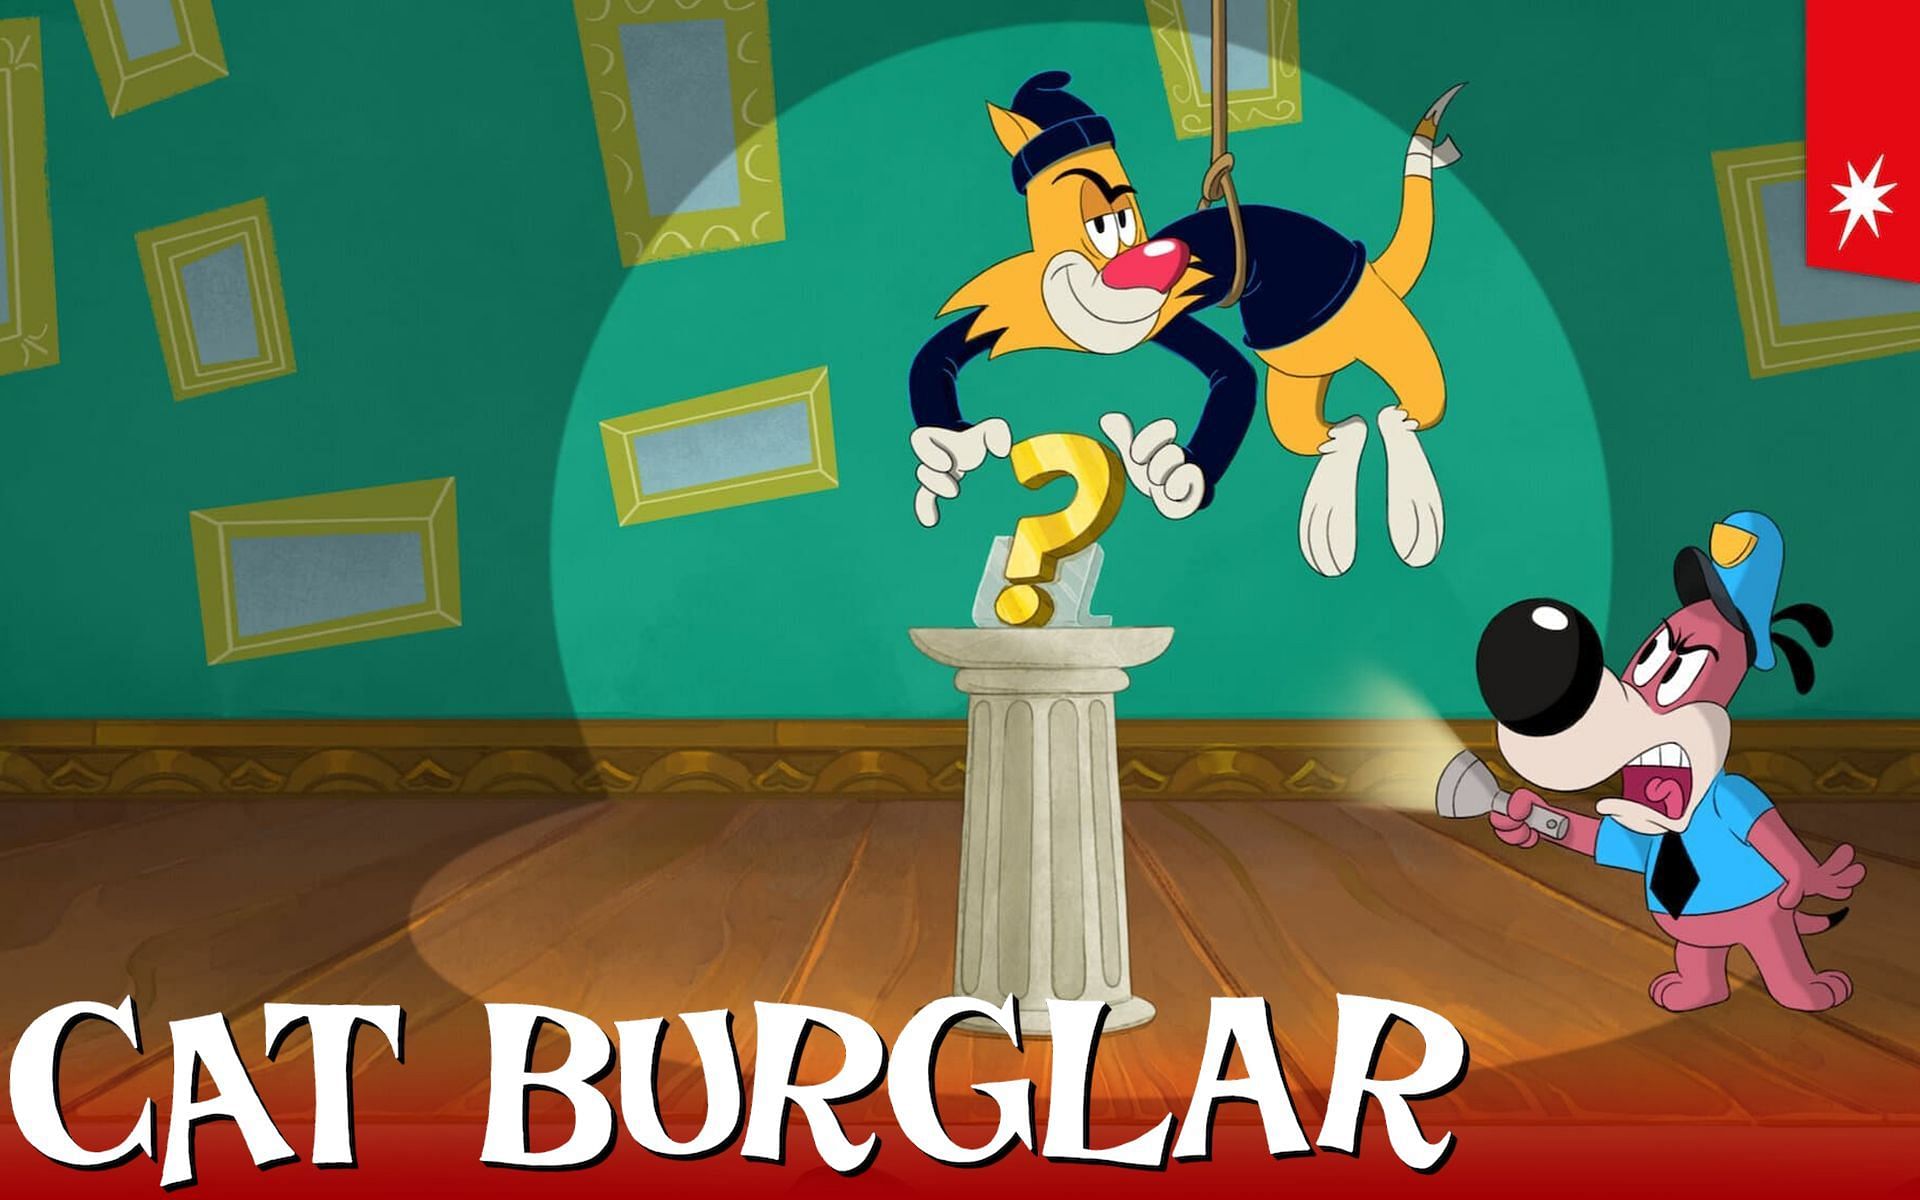 Cat Burglar comes to Netflix on February 22 (Image via Netflix)